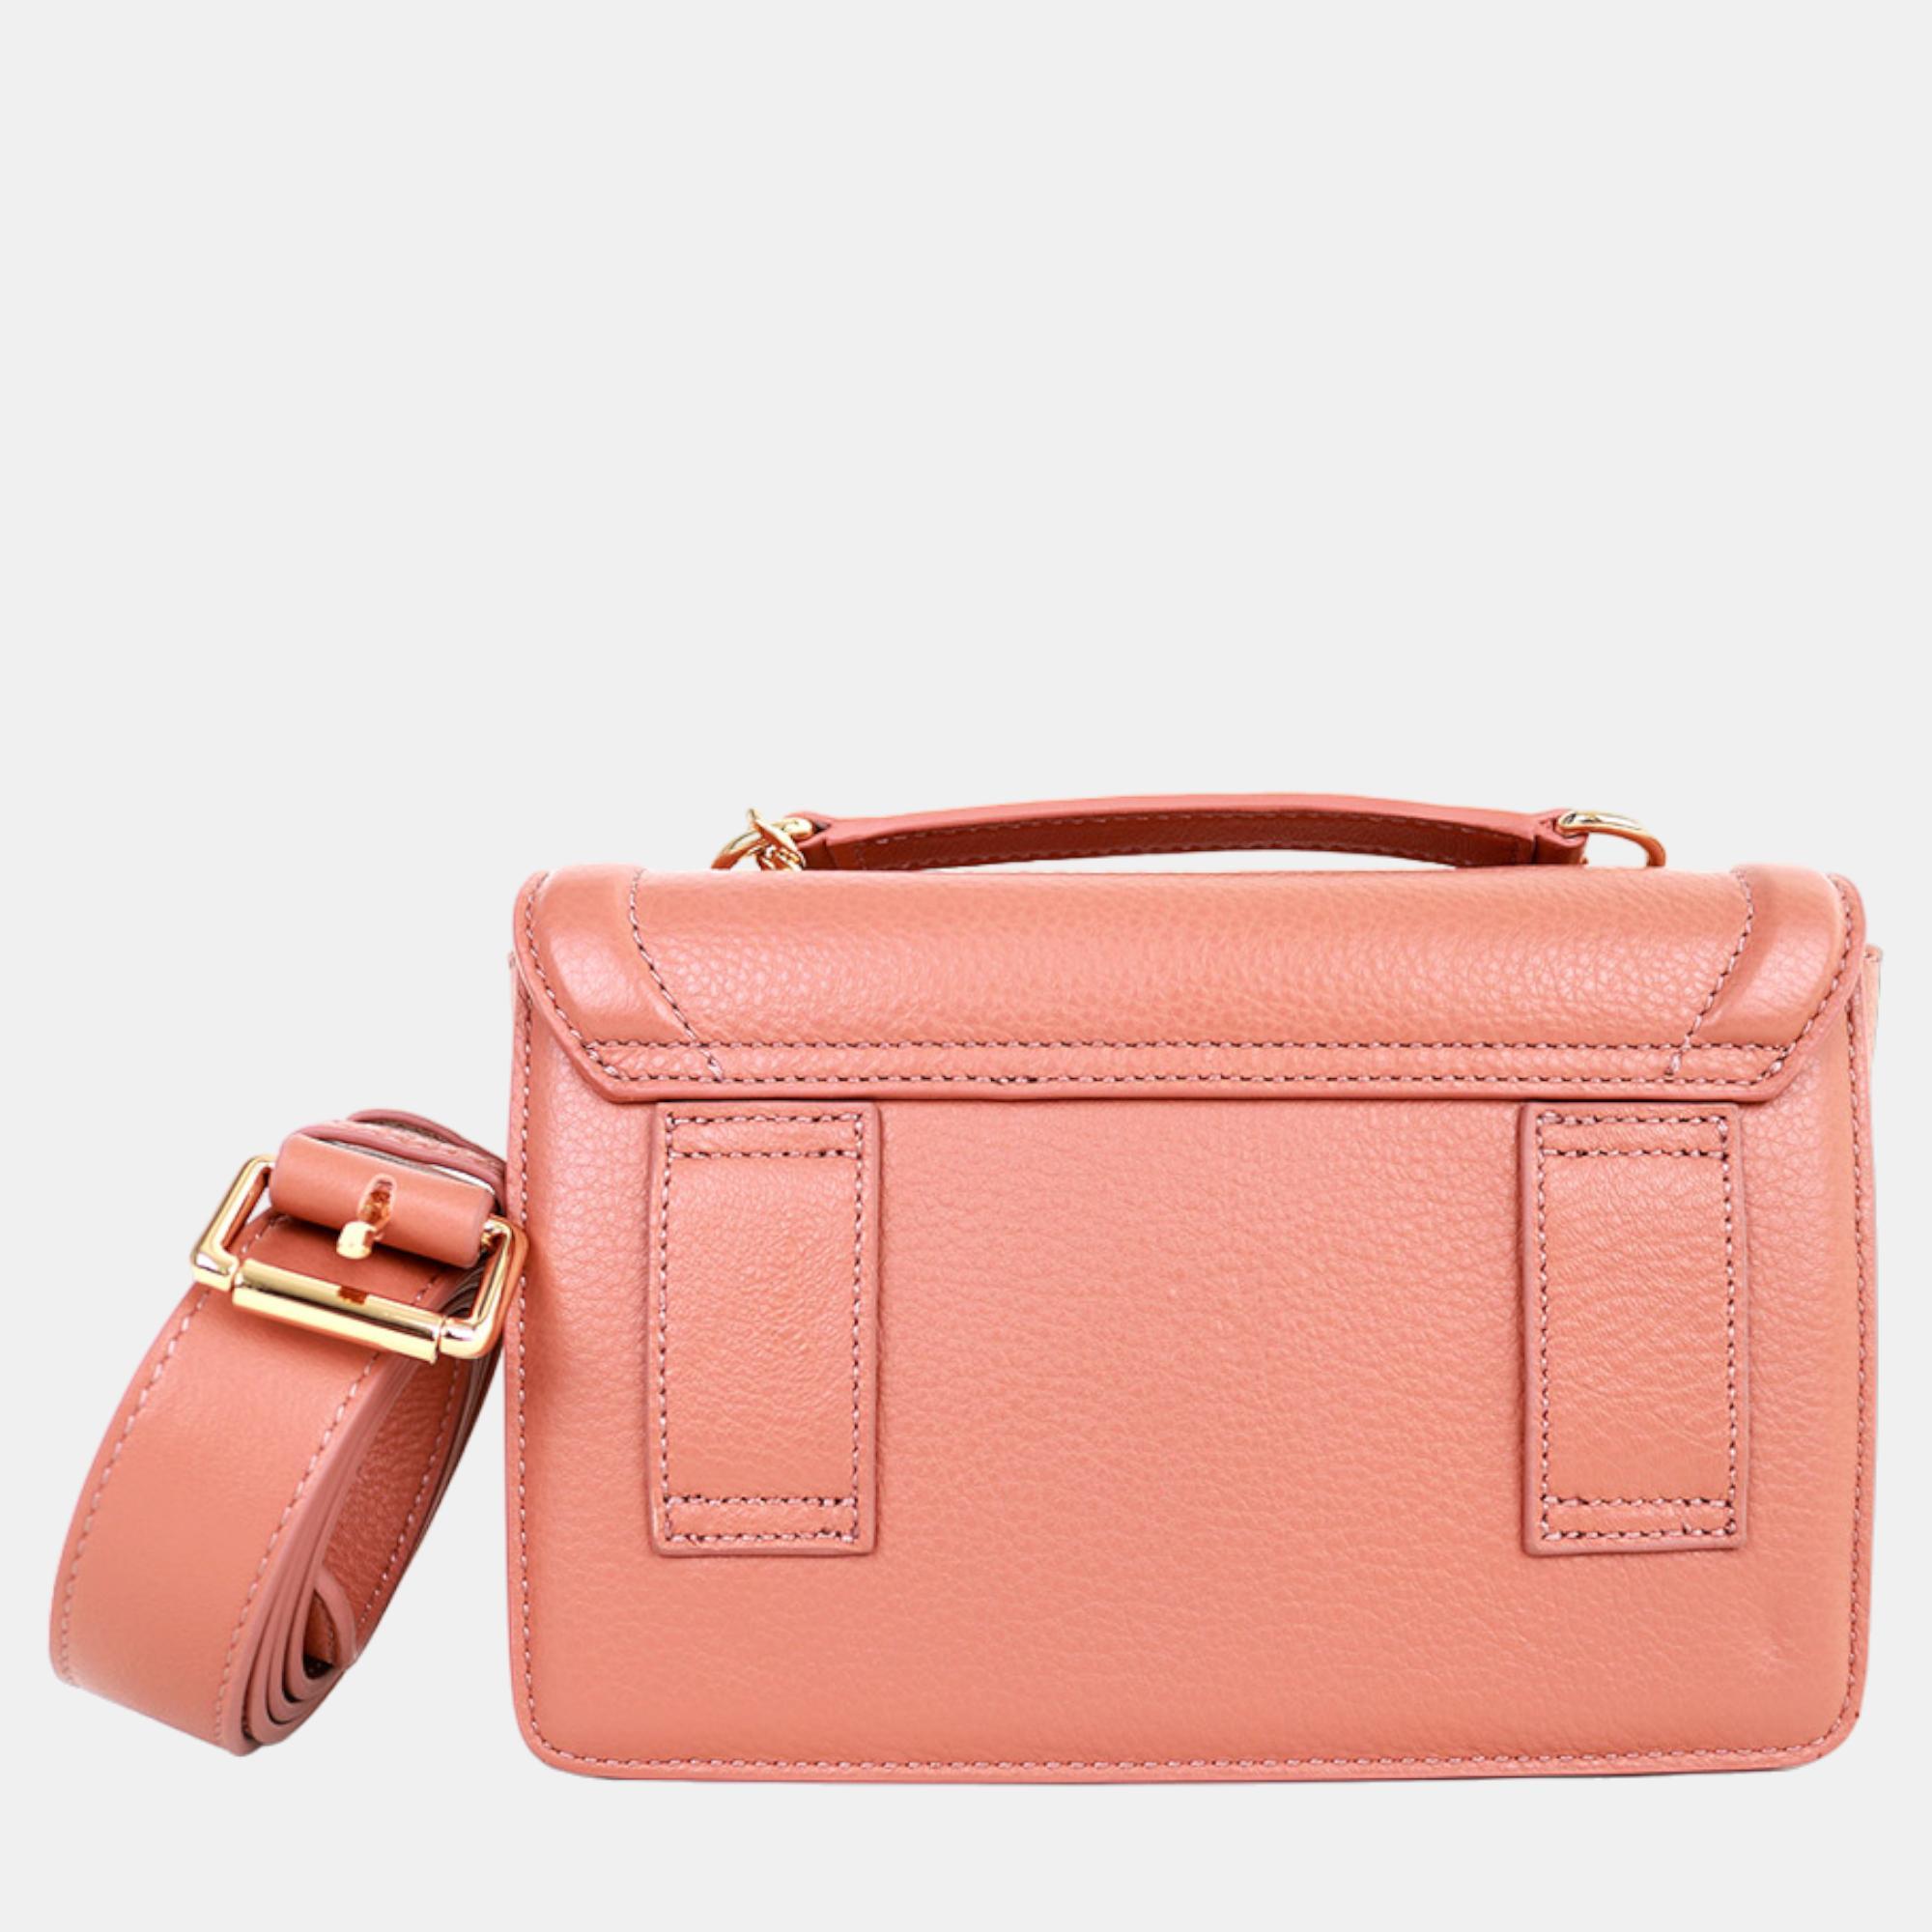 Charriol Light Brownn Leather Twilight Handbag